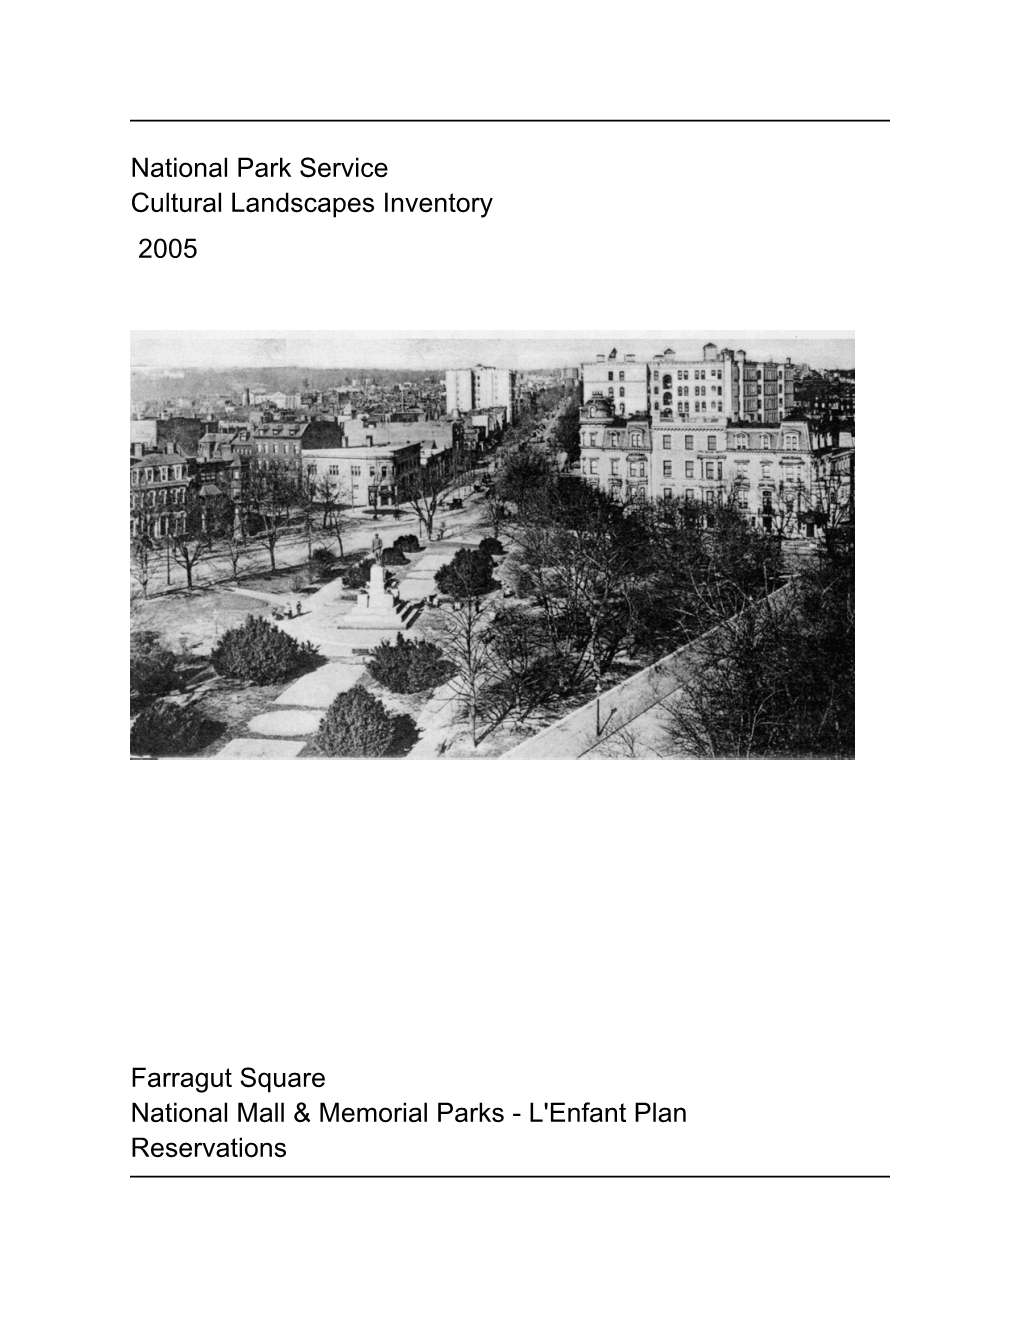 National Park Service Cultural Landscapes Inventory Farragut Square National Mall & Memorial Parks